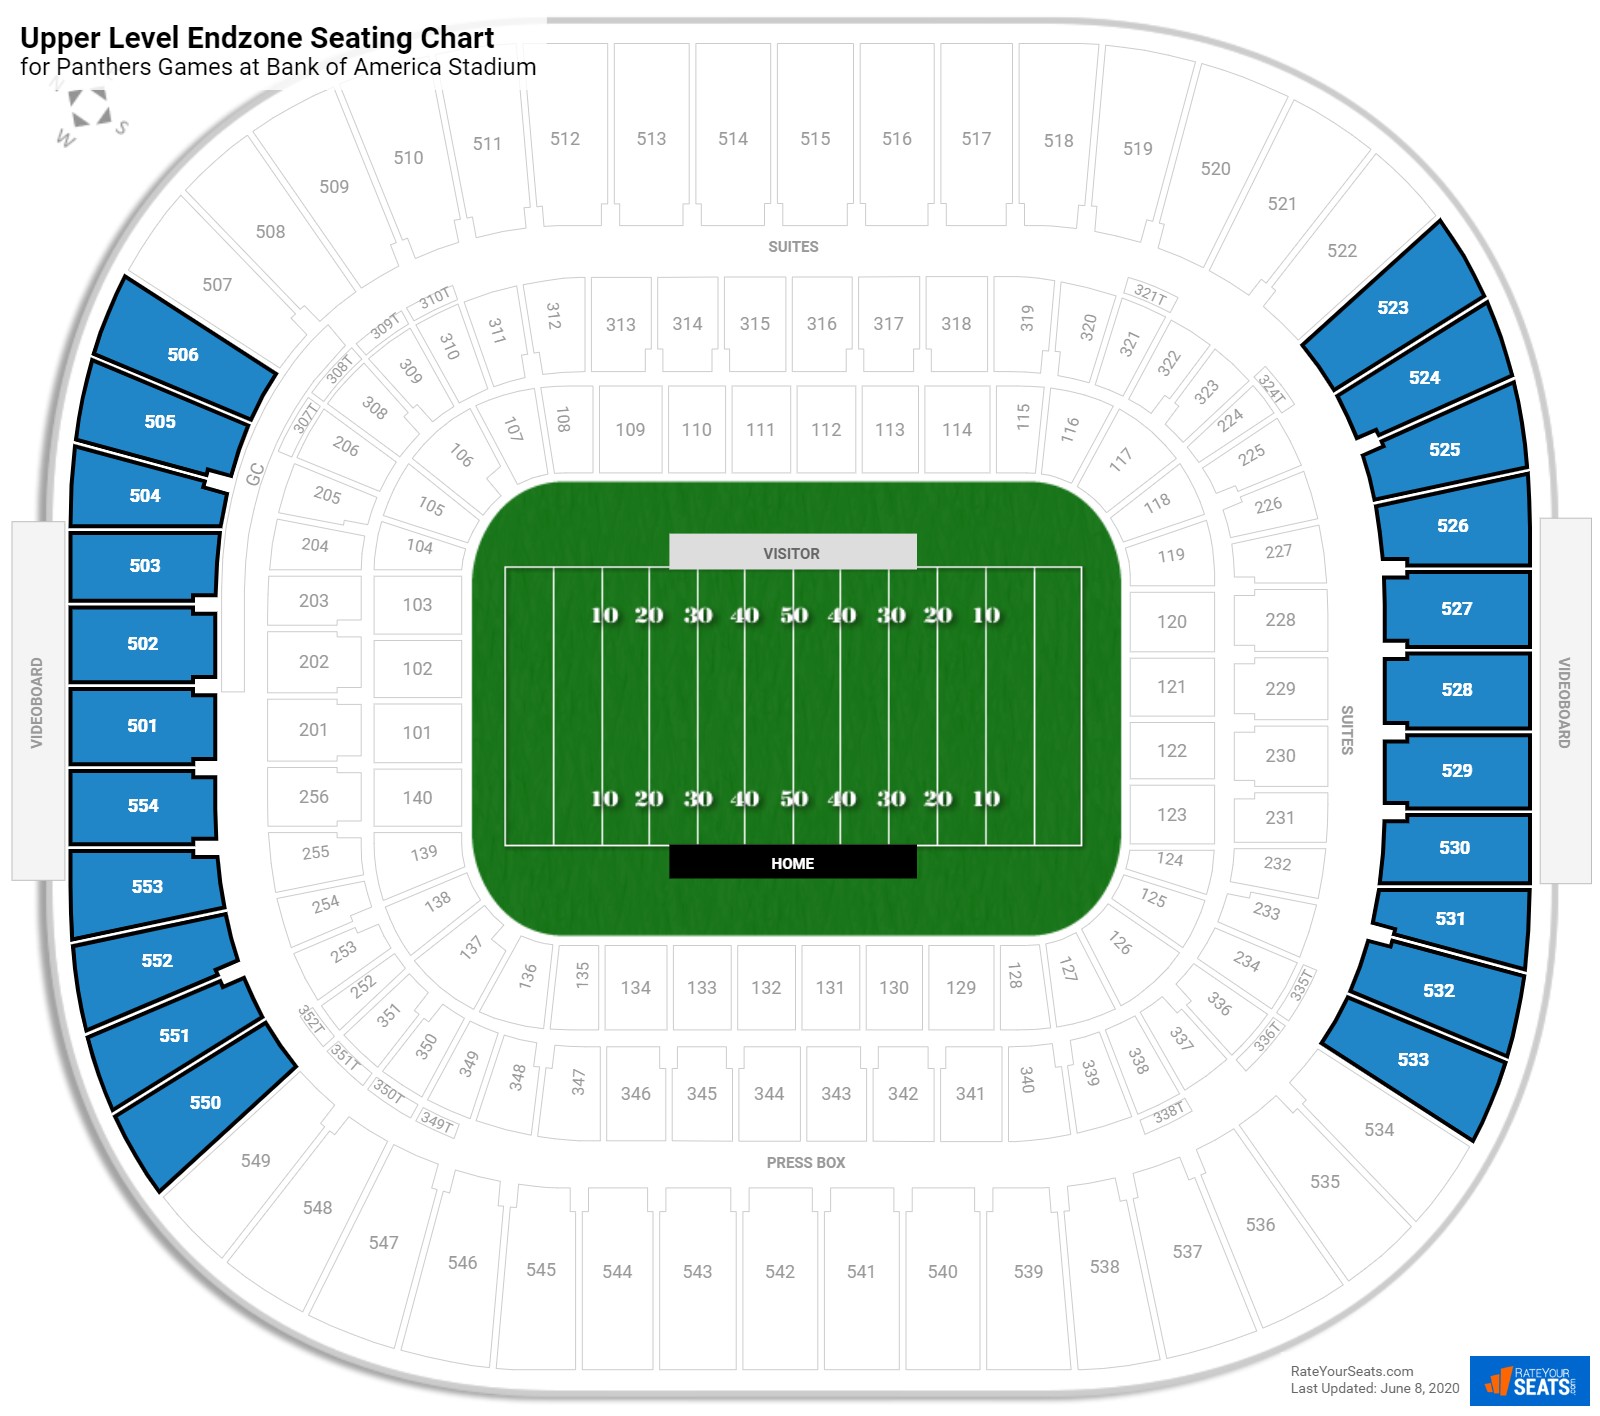 Upper Level Endzone - Bank of America Stadium Football Seating - RateYourSeats.com